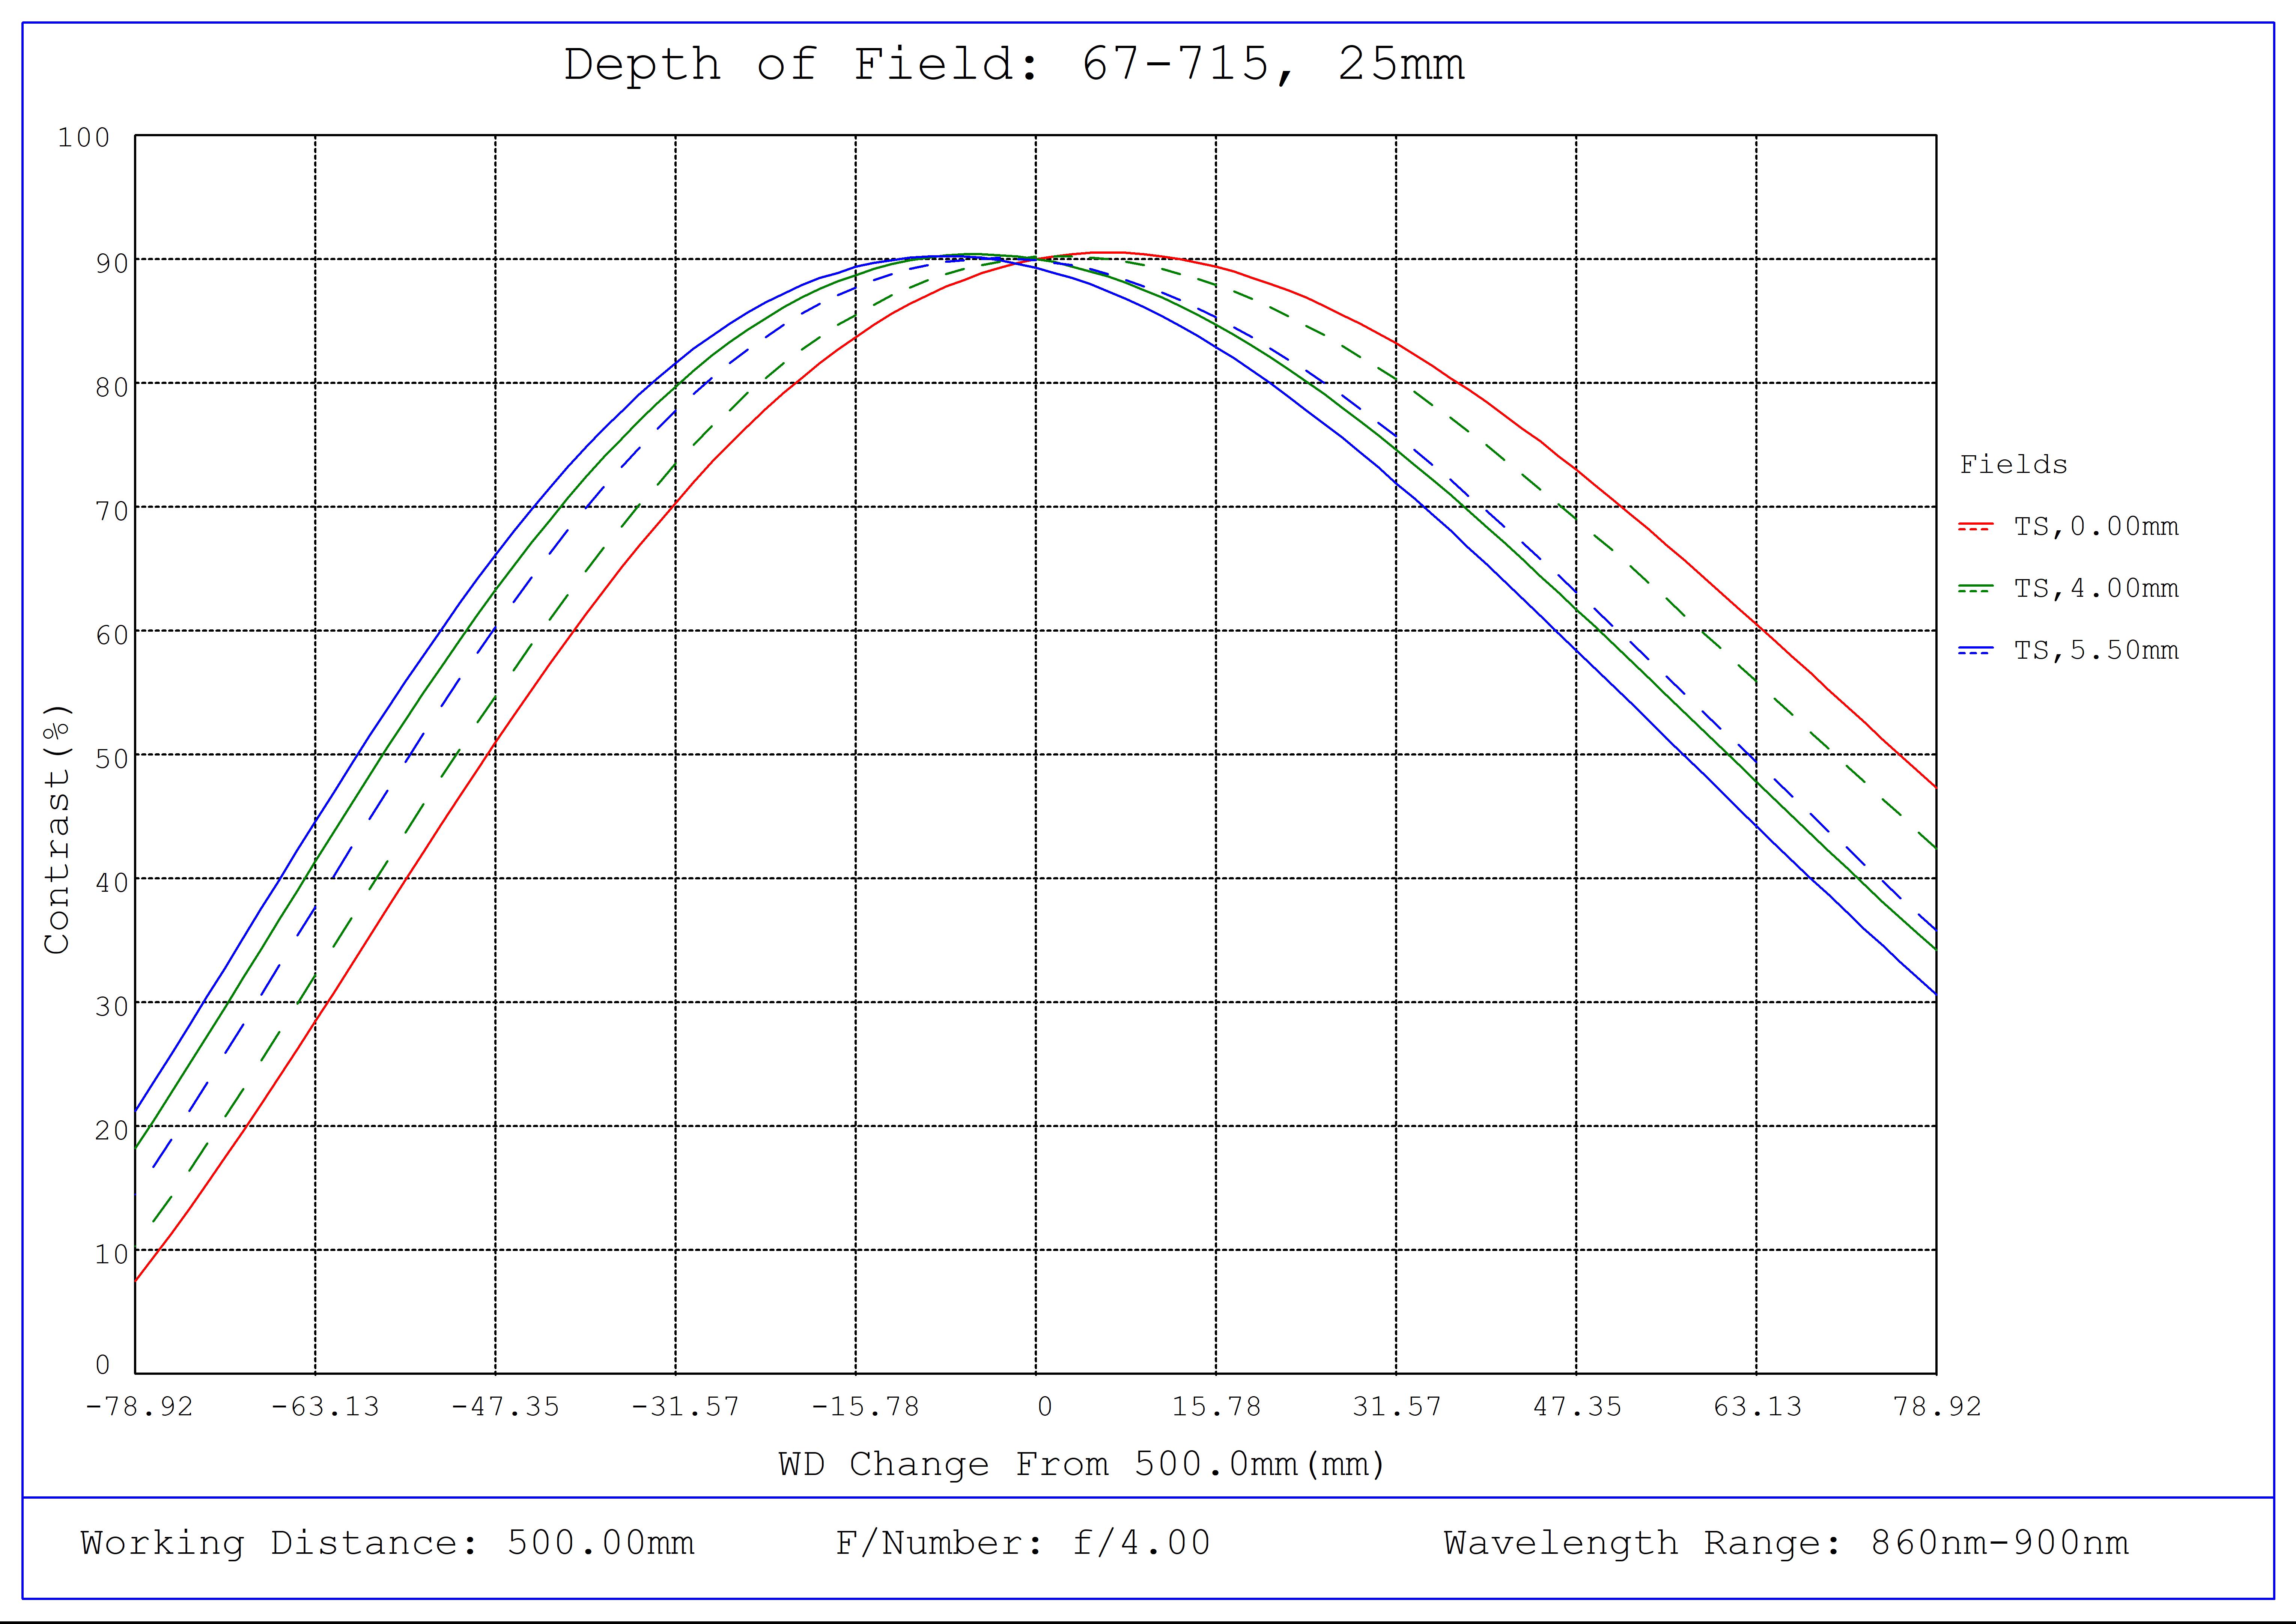 #67-715, 25mm C VIS-NIR Series Fixed Focal Length Lens, Depth of Field Plot (NIR), 500mm Working Distance, f4